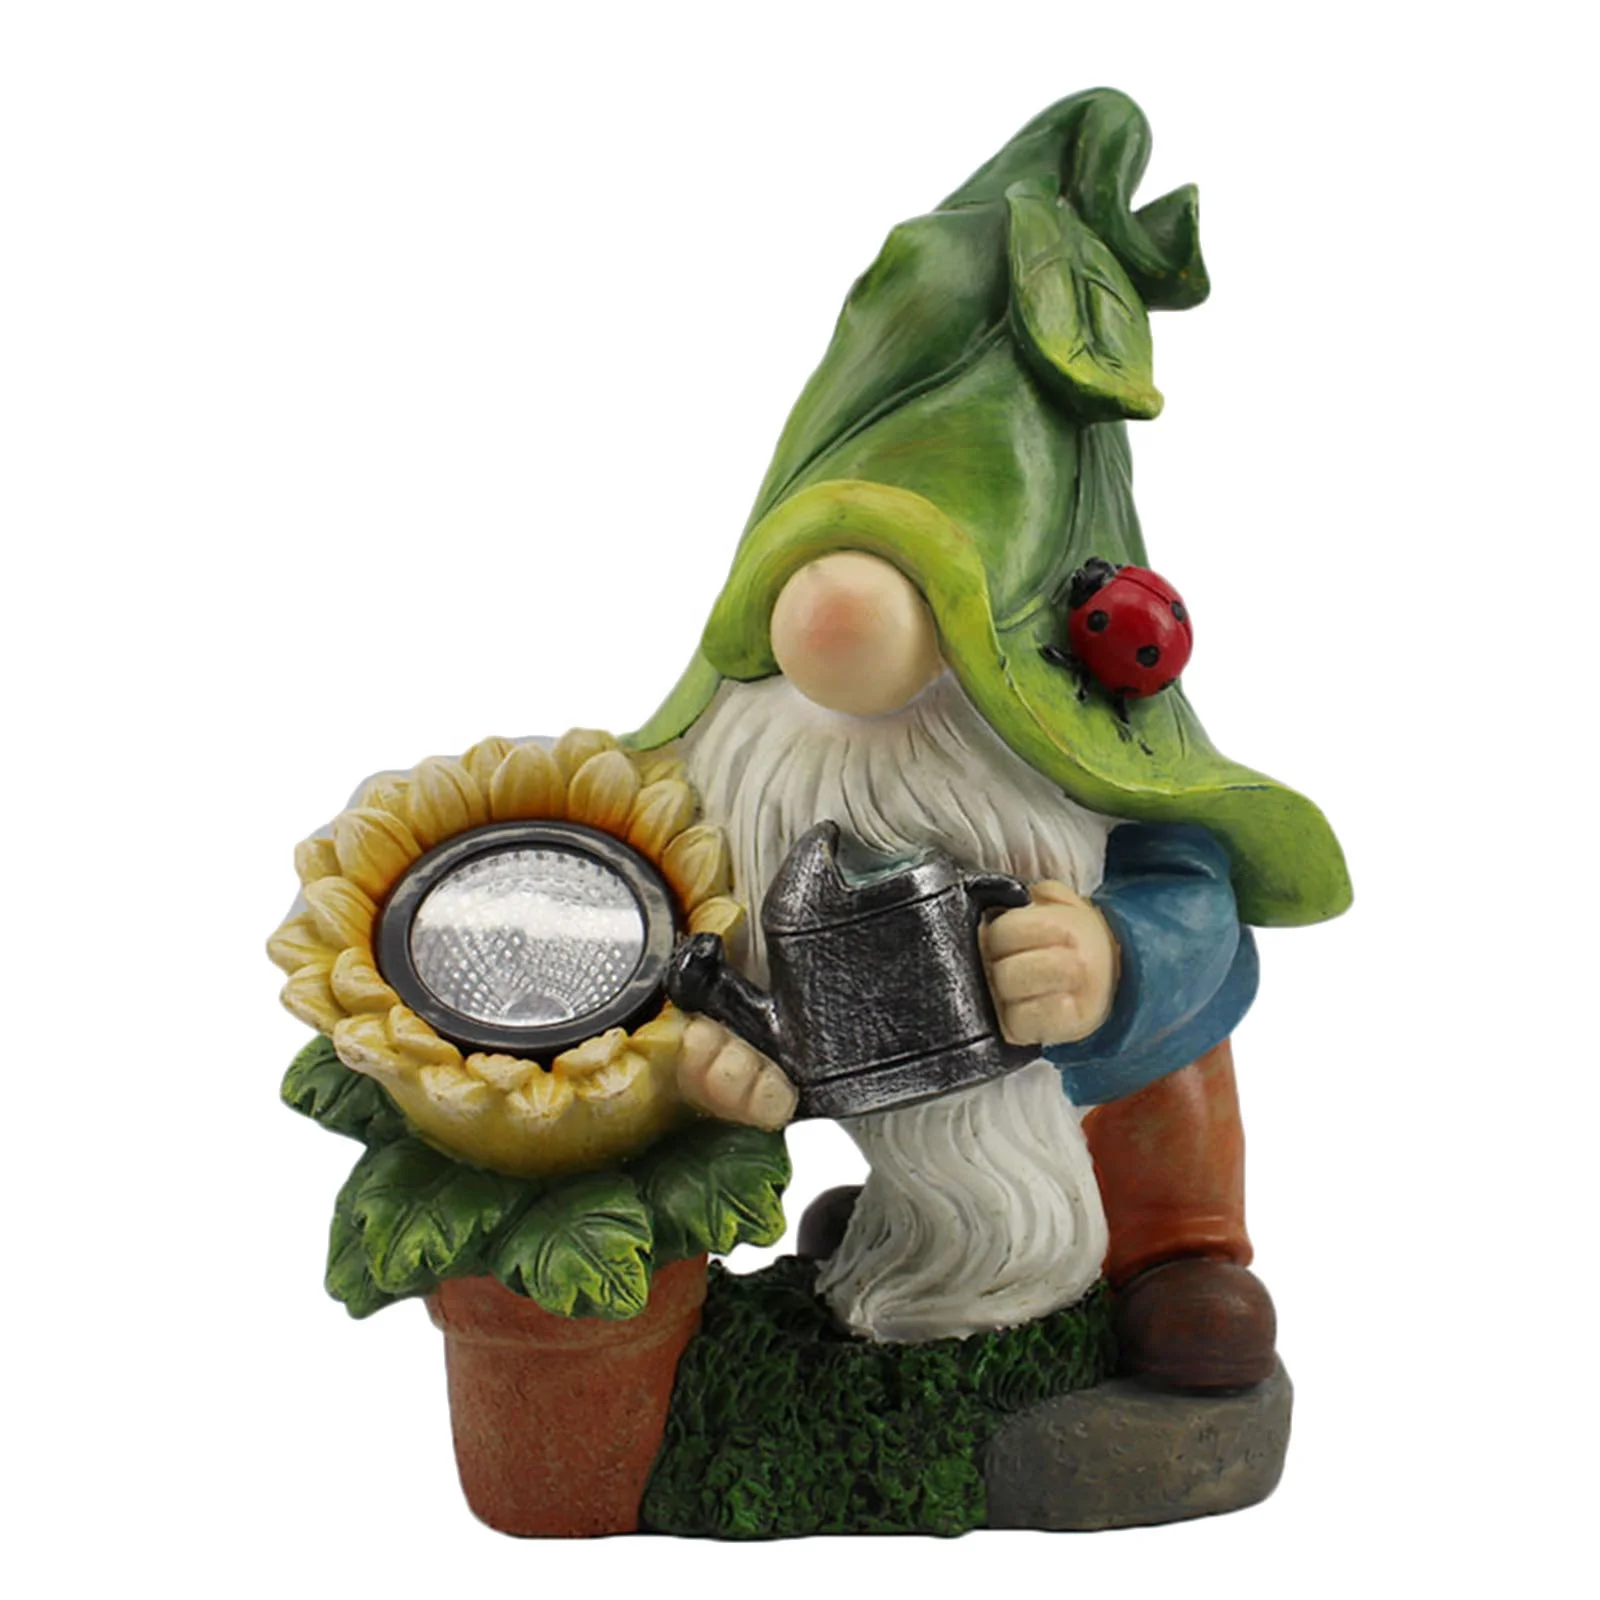 

Hot sale Garden gnome with led light Resin Elf statue decoration solar luminous dwarf ornaments, Mix colors